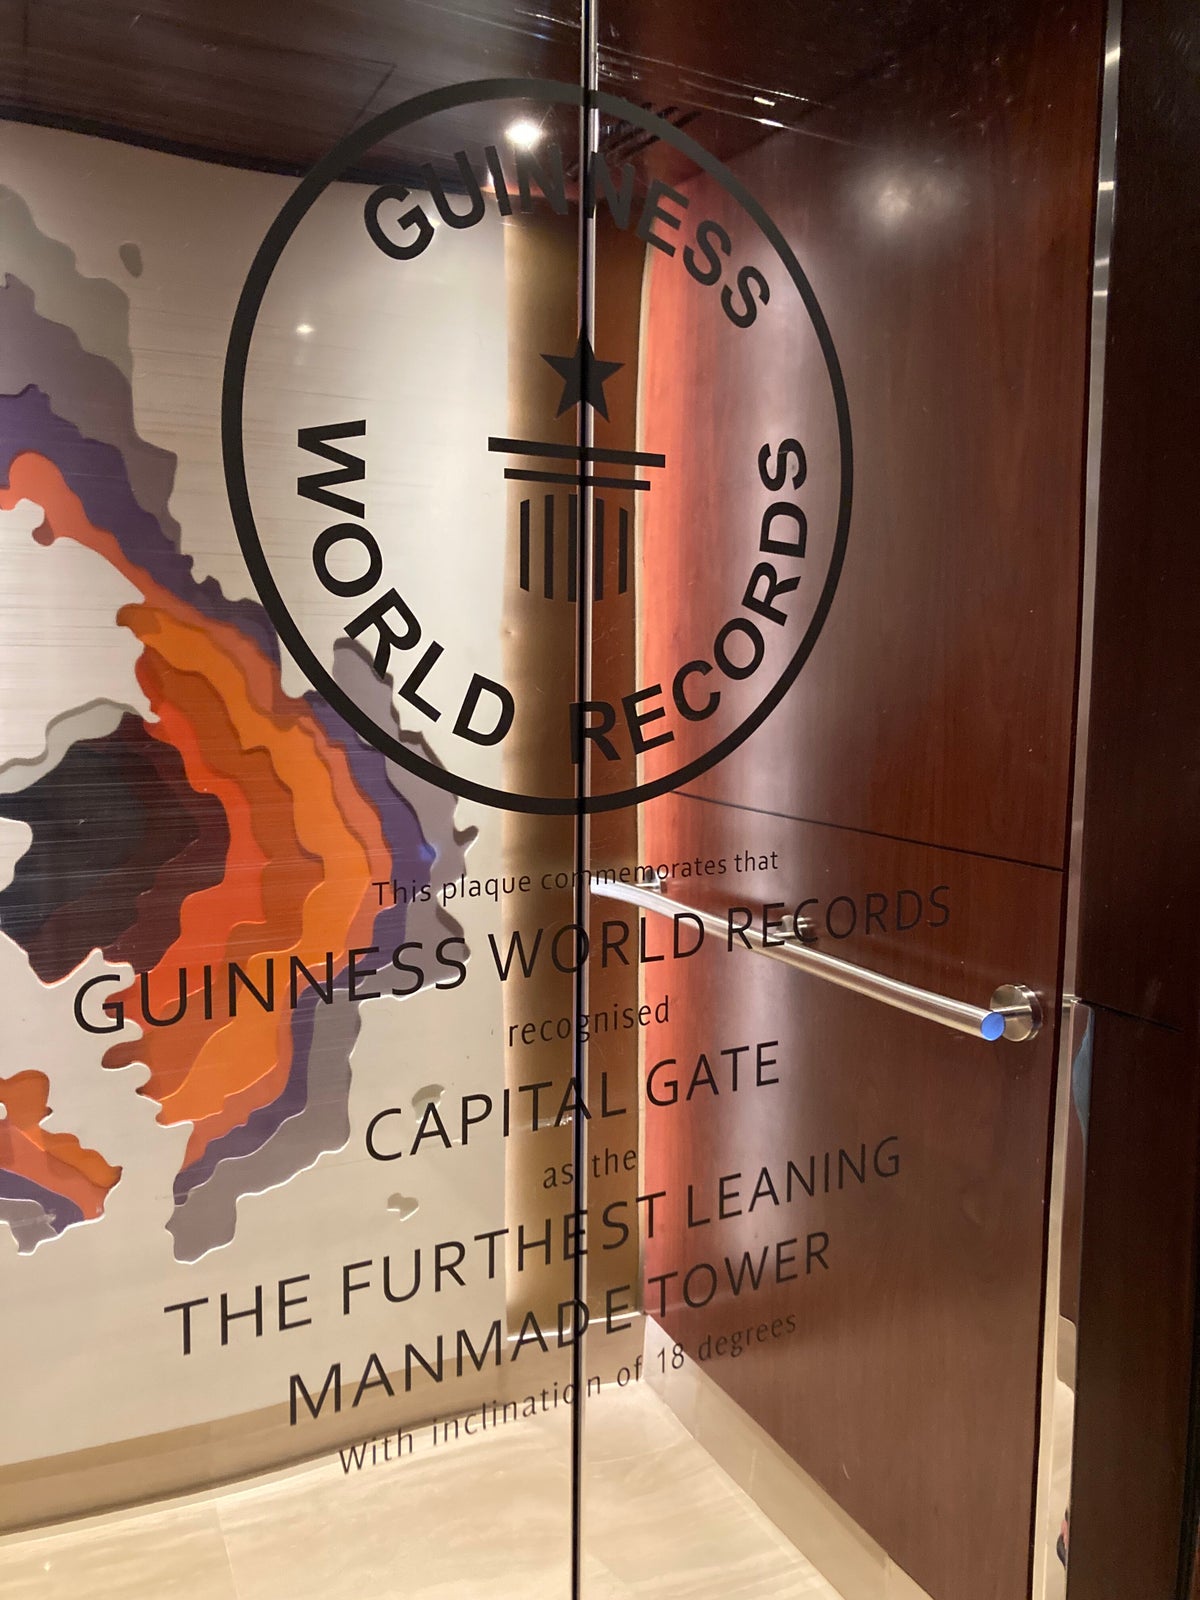 Andaz Capital Gate Abu Dhabi Guinness World Records elevator